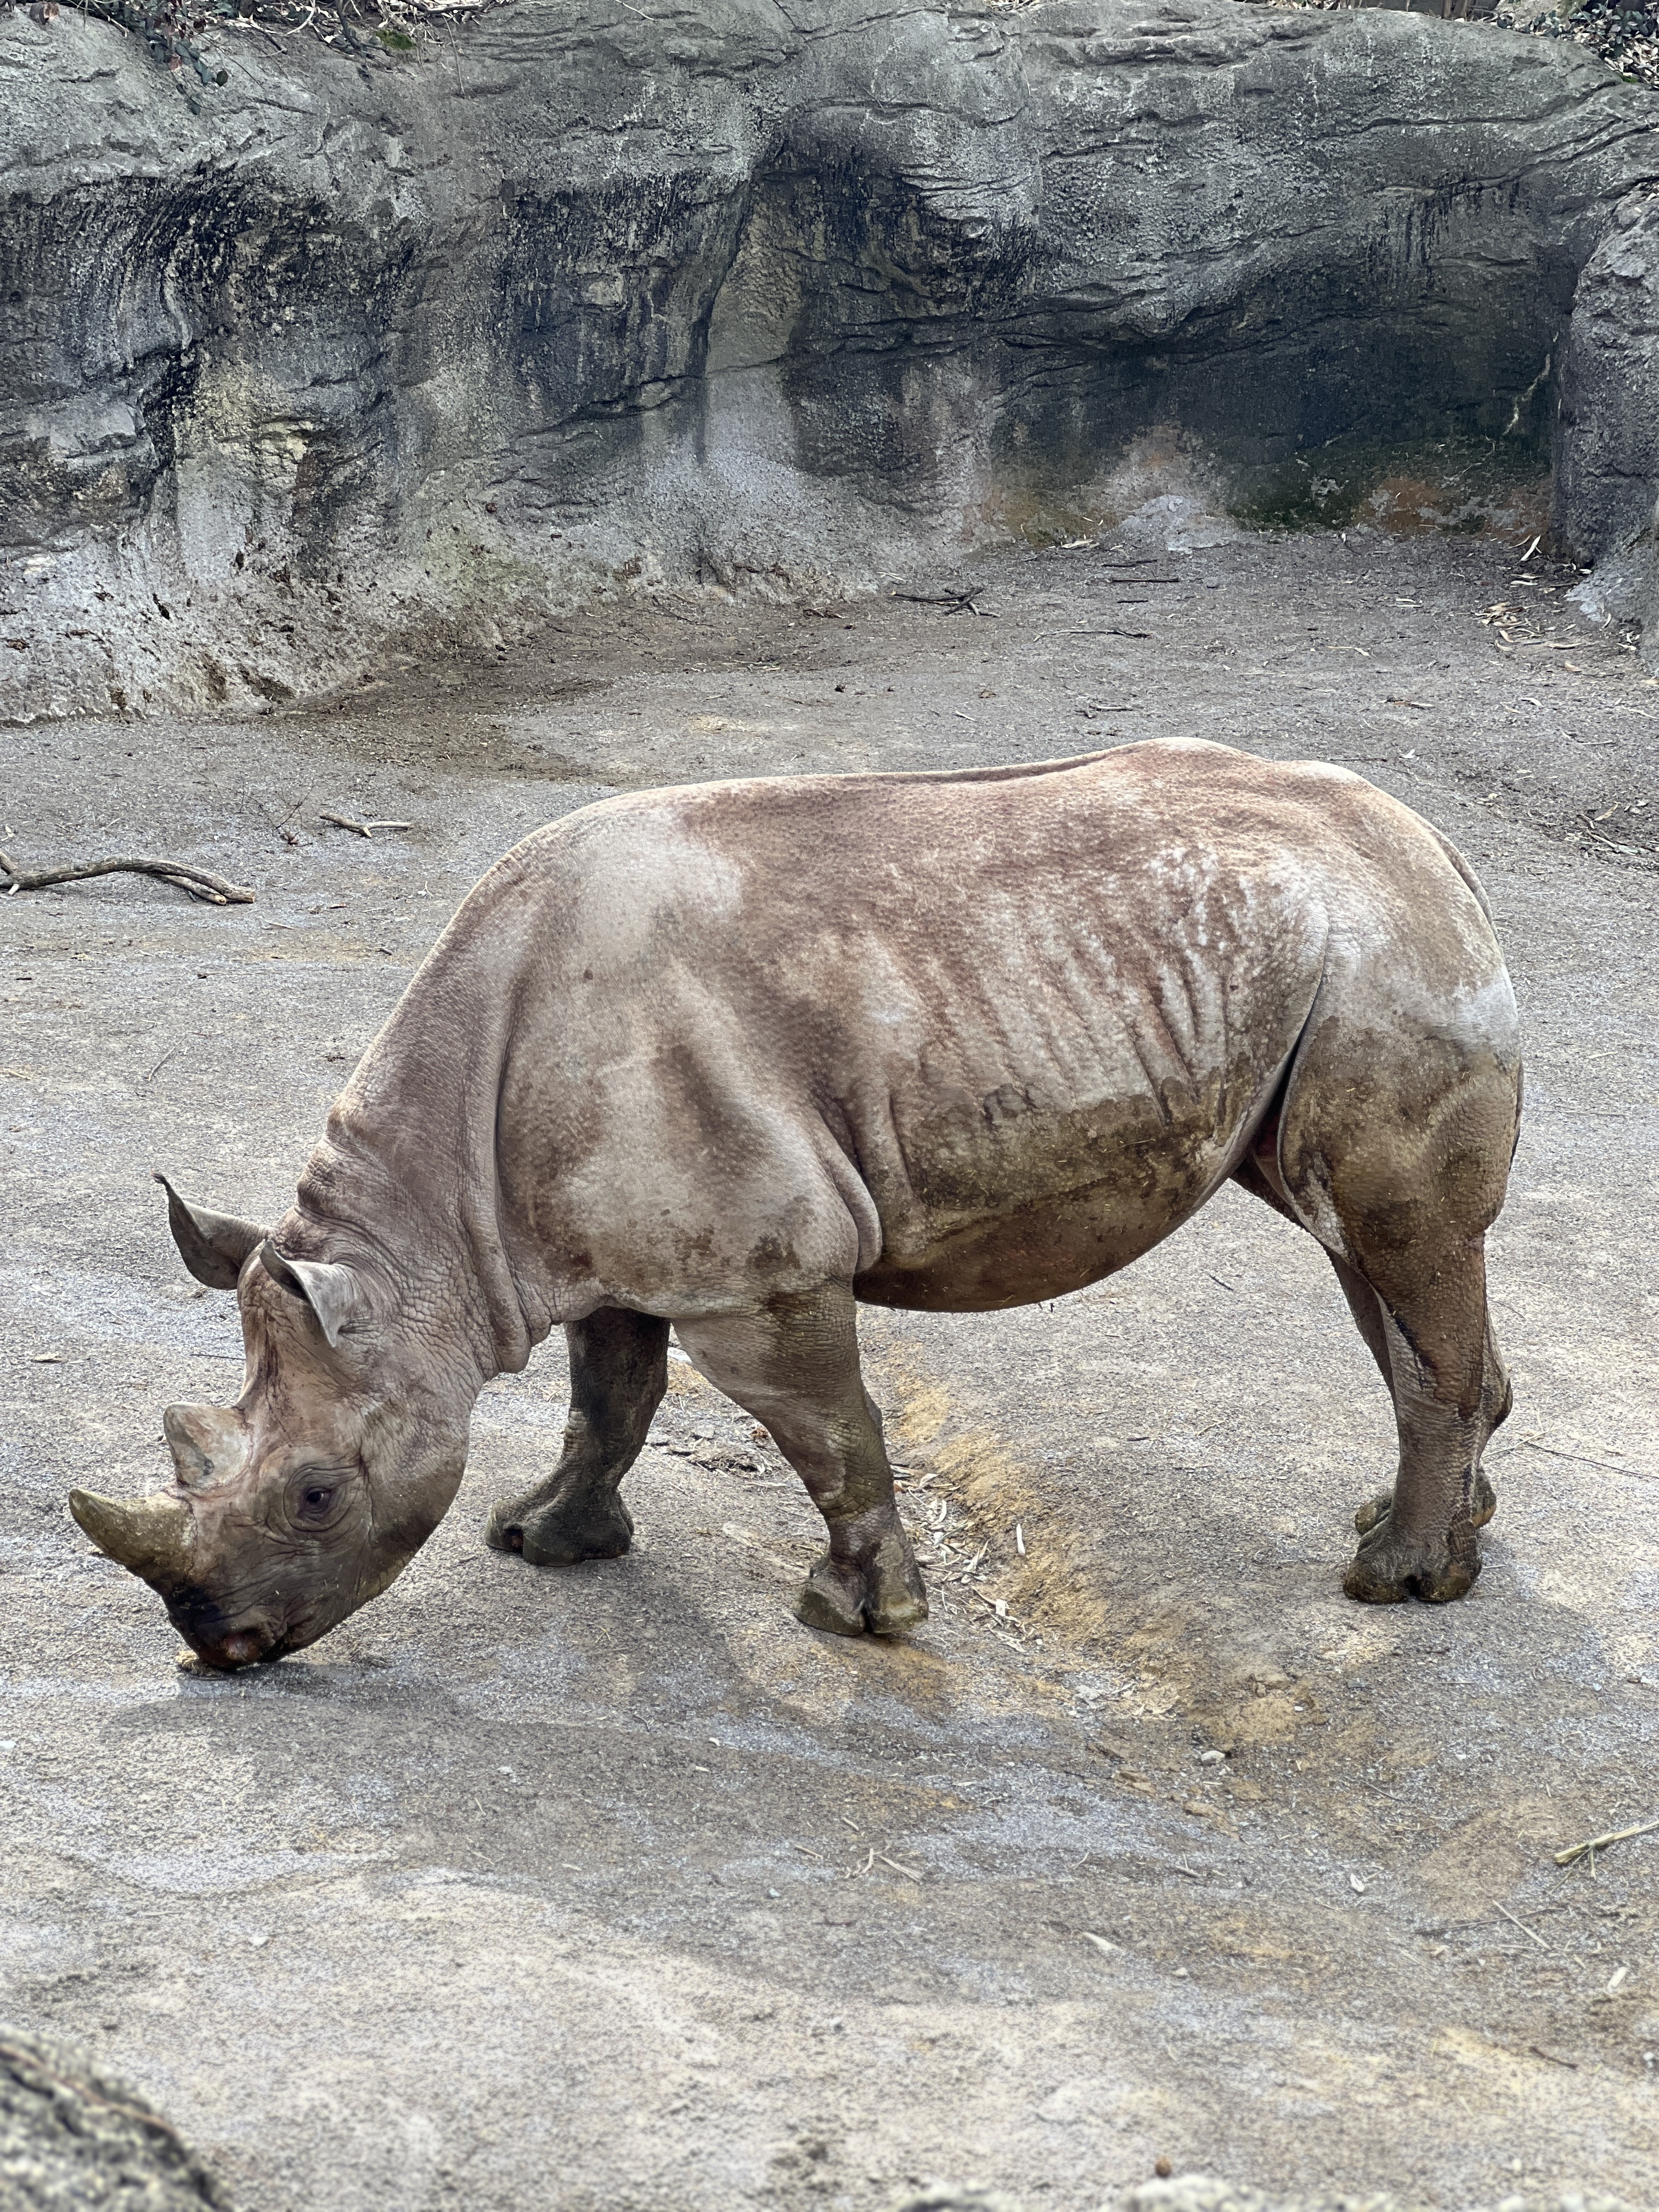 A black rhino at the Zoo.